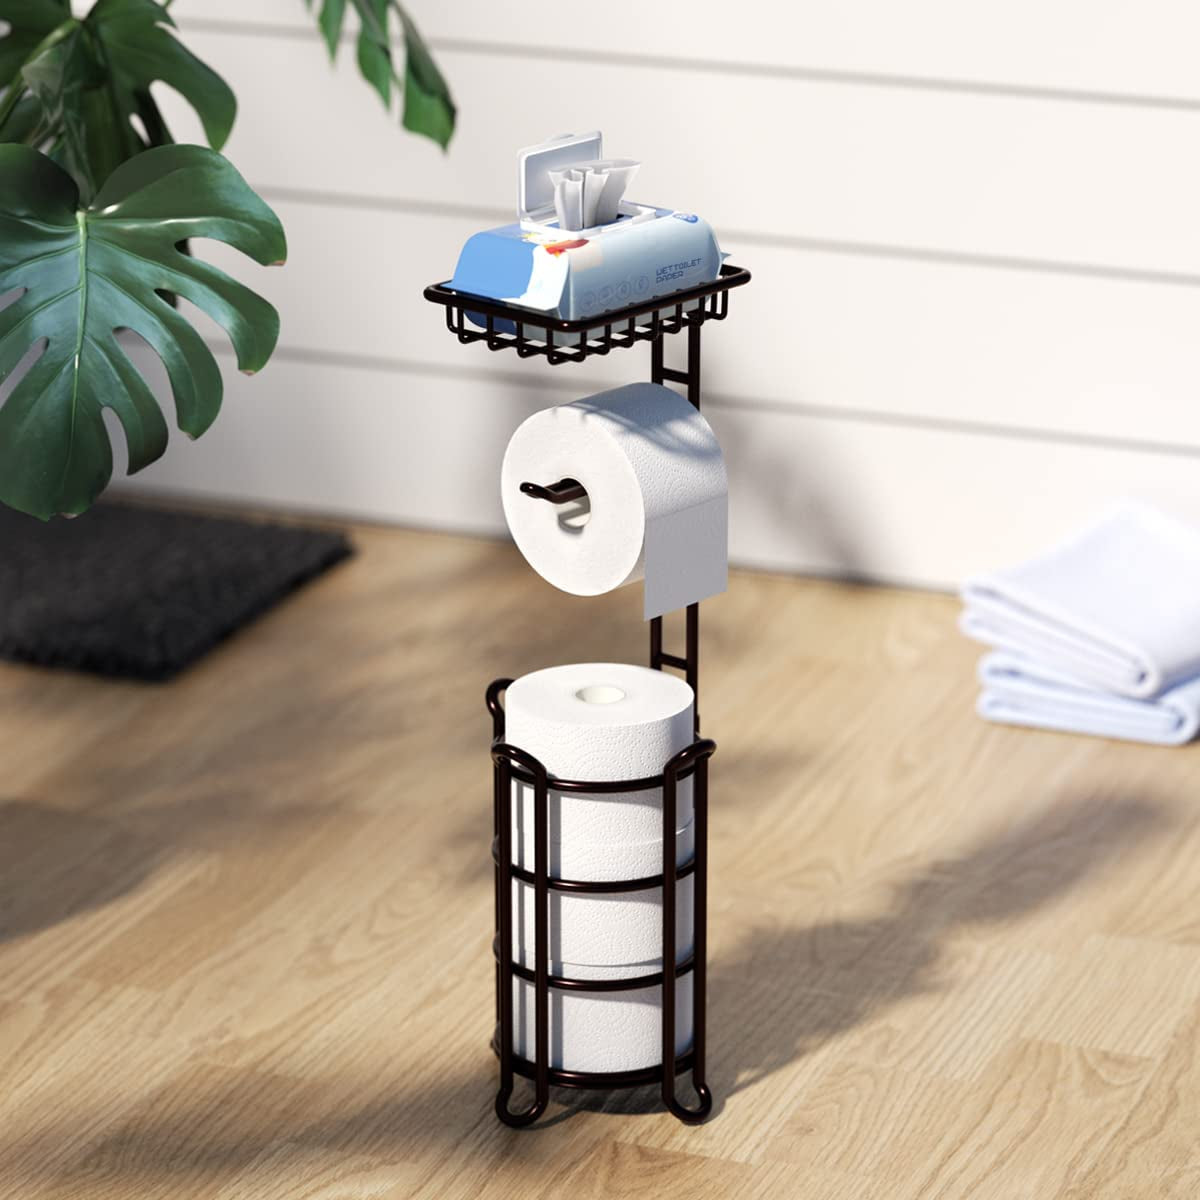 Toilet Paper Holder Stand Tissue Paper Roll Dispenser with Shelf for Bathroom Storage Holds Reserve Mega Rolls-Bronze